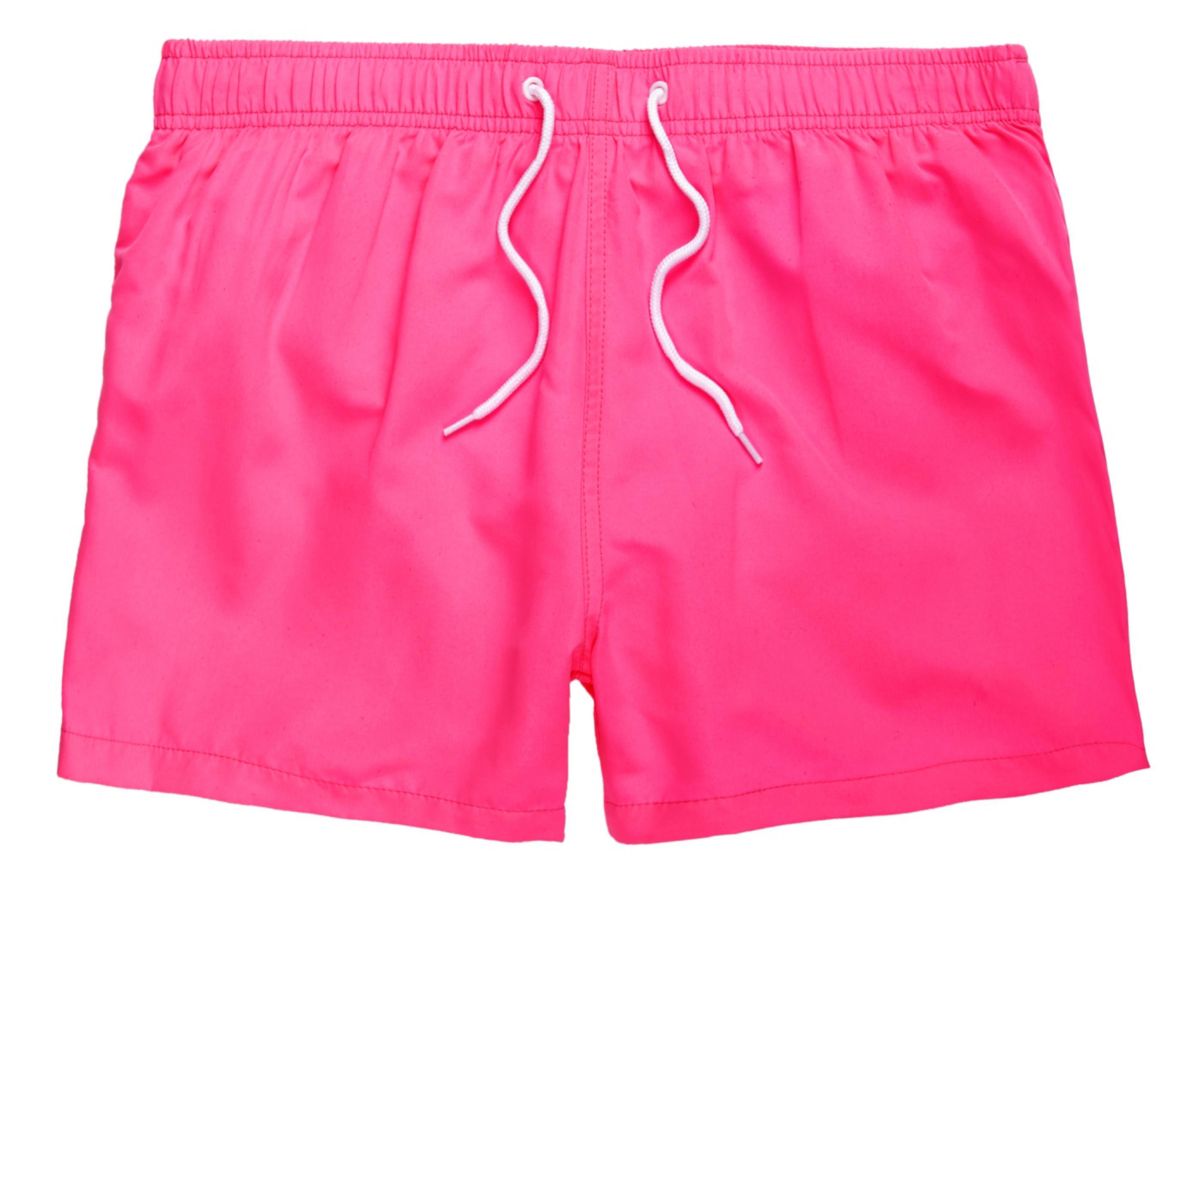 Pink neon swim shorts - Shorts - Sale - men